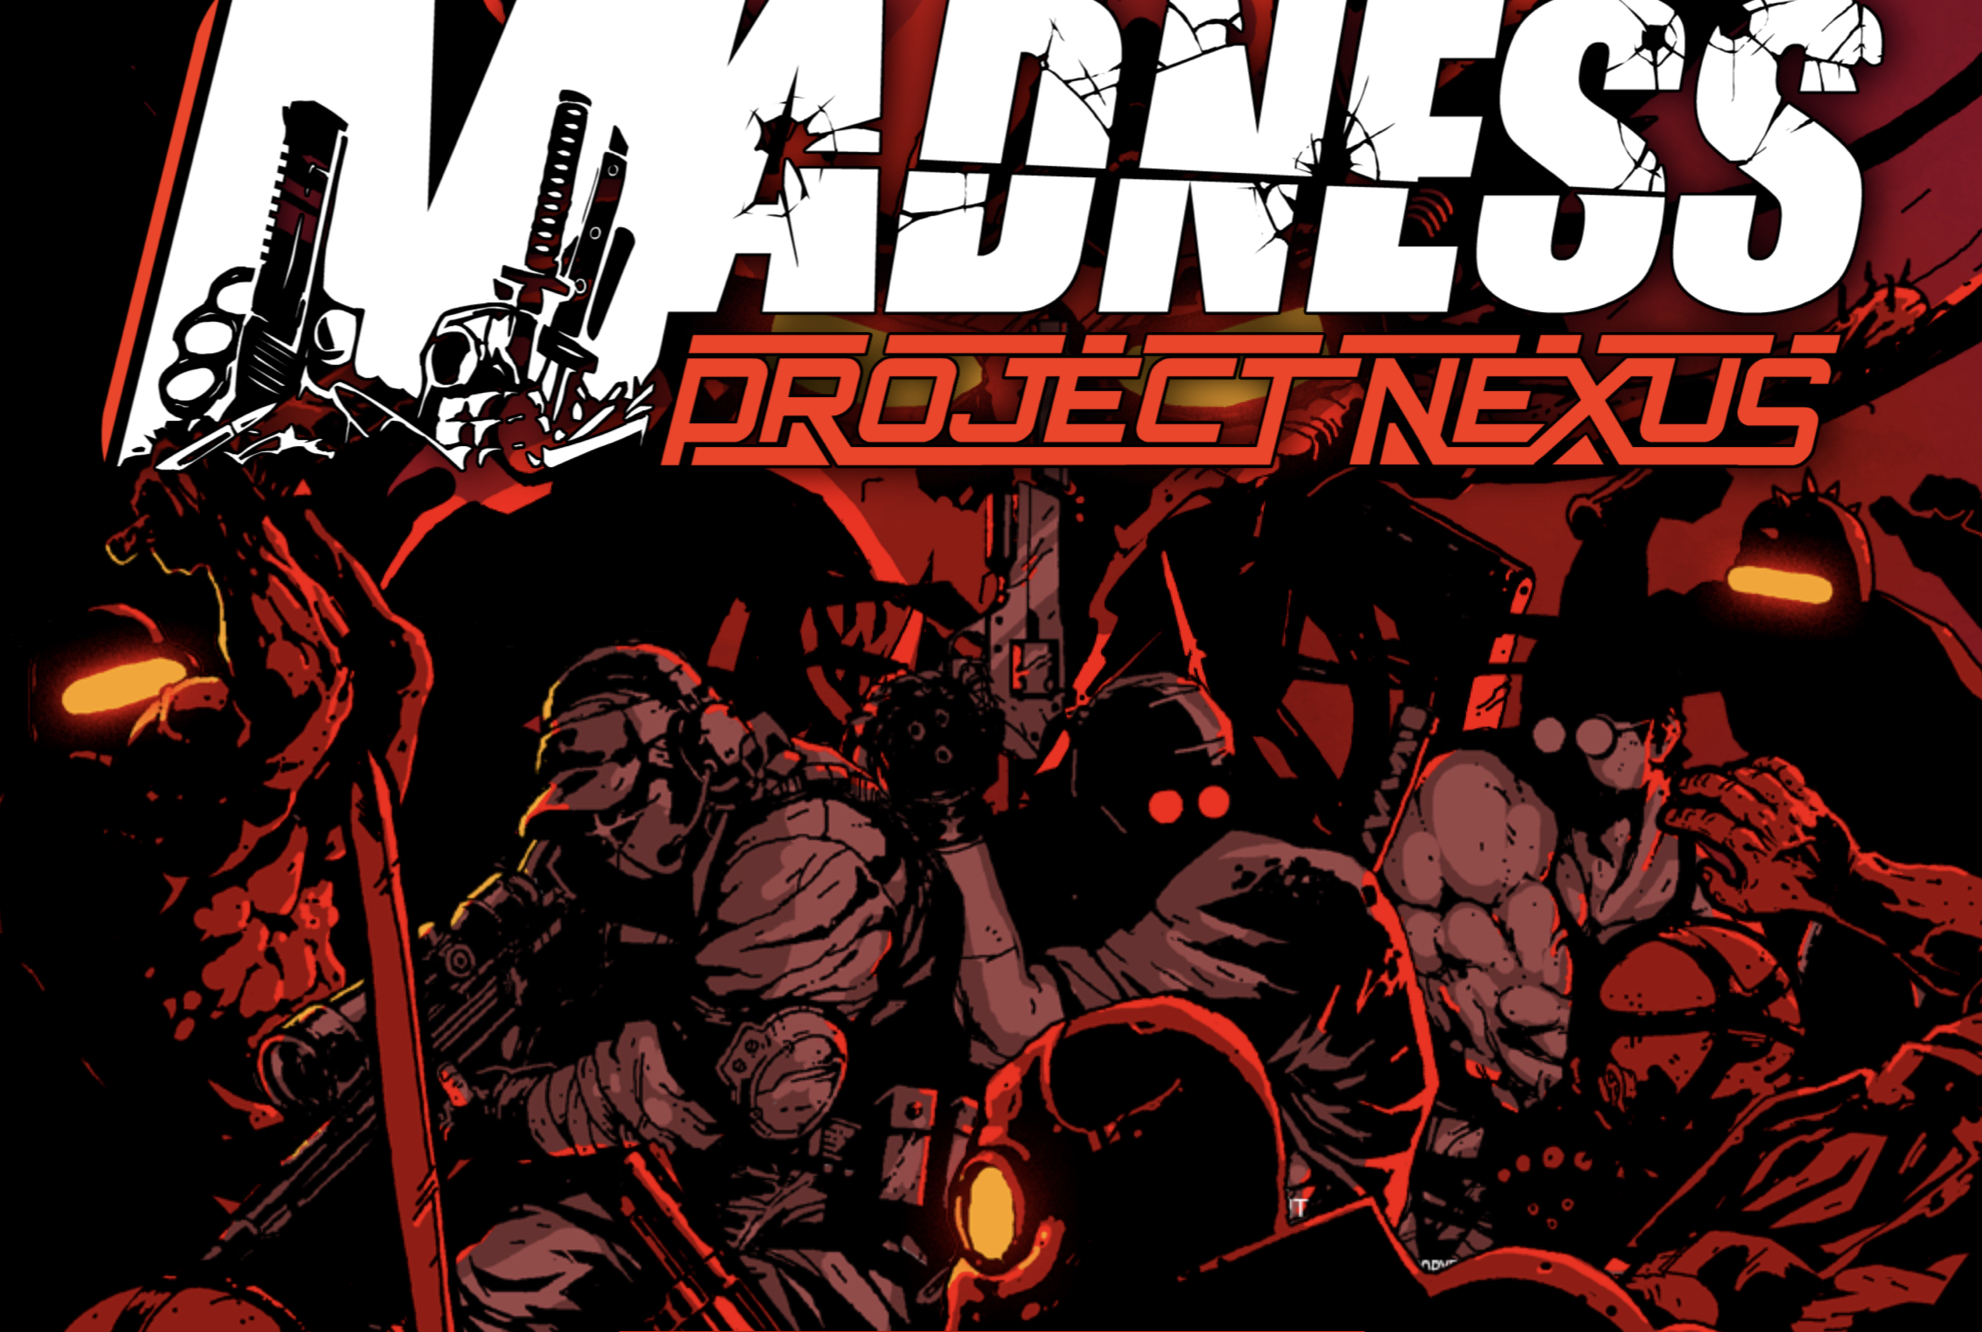 www madness project nexus 2 com